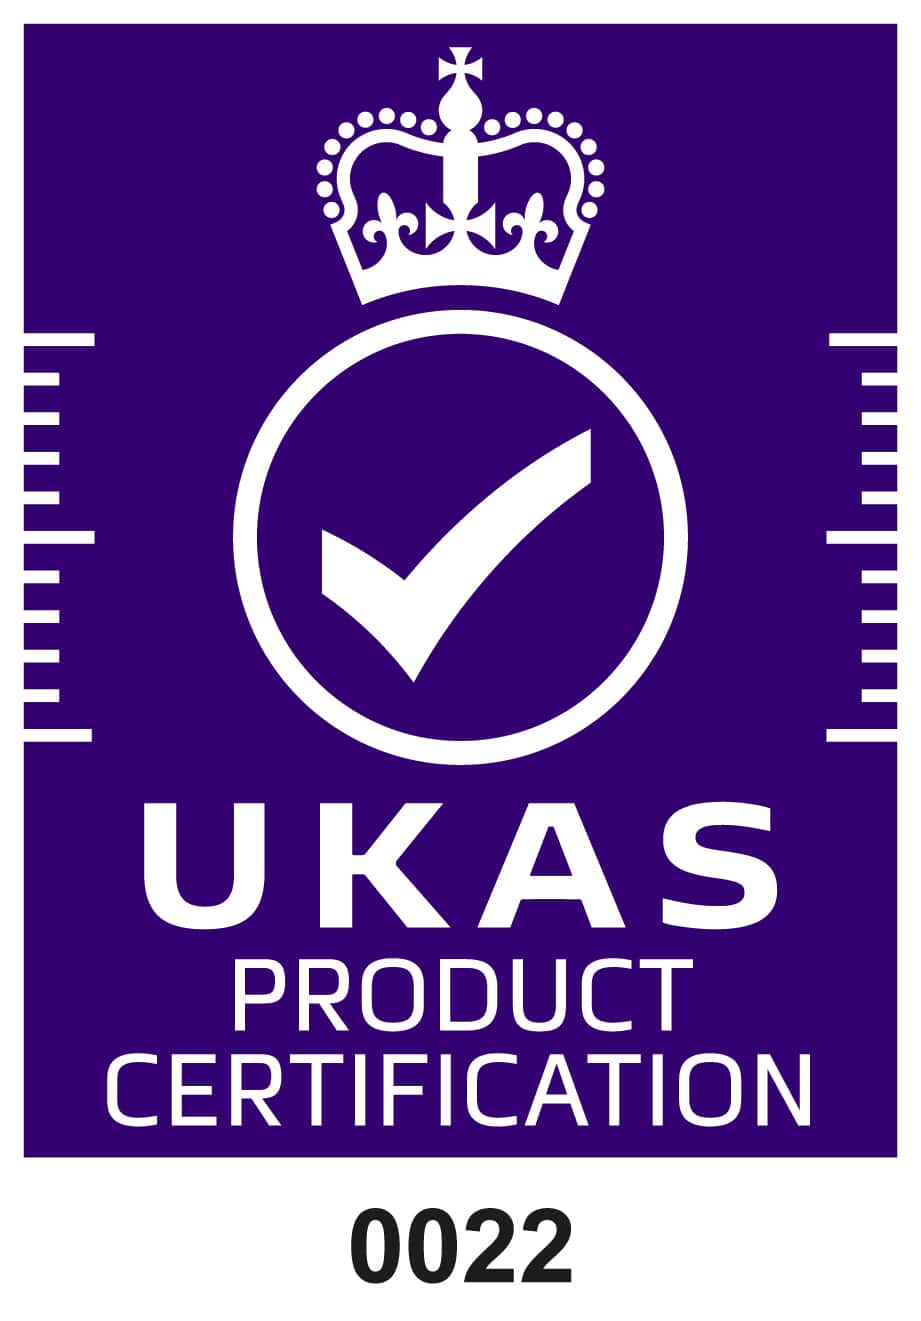 Ukas accreditation symbol white on purple product certification